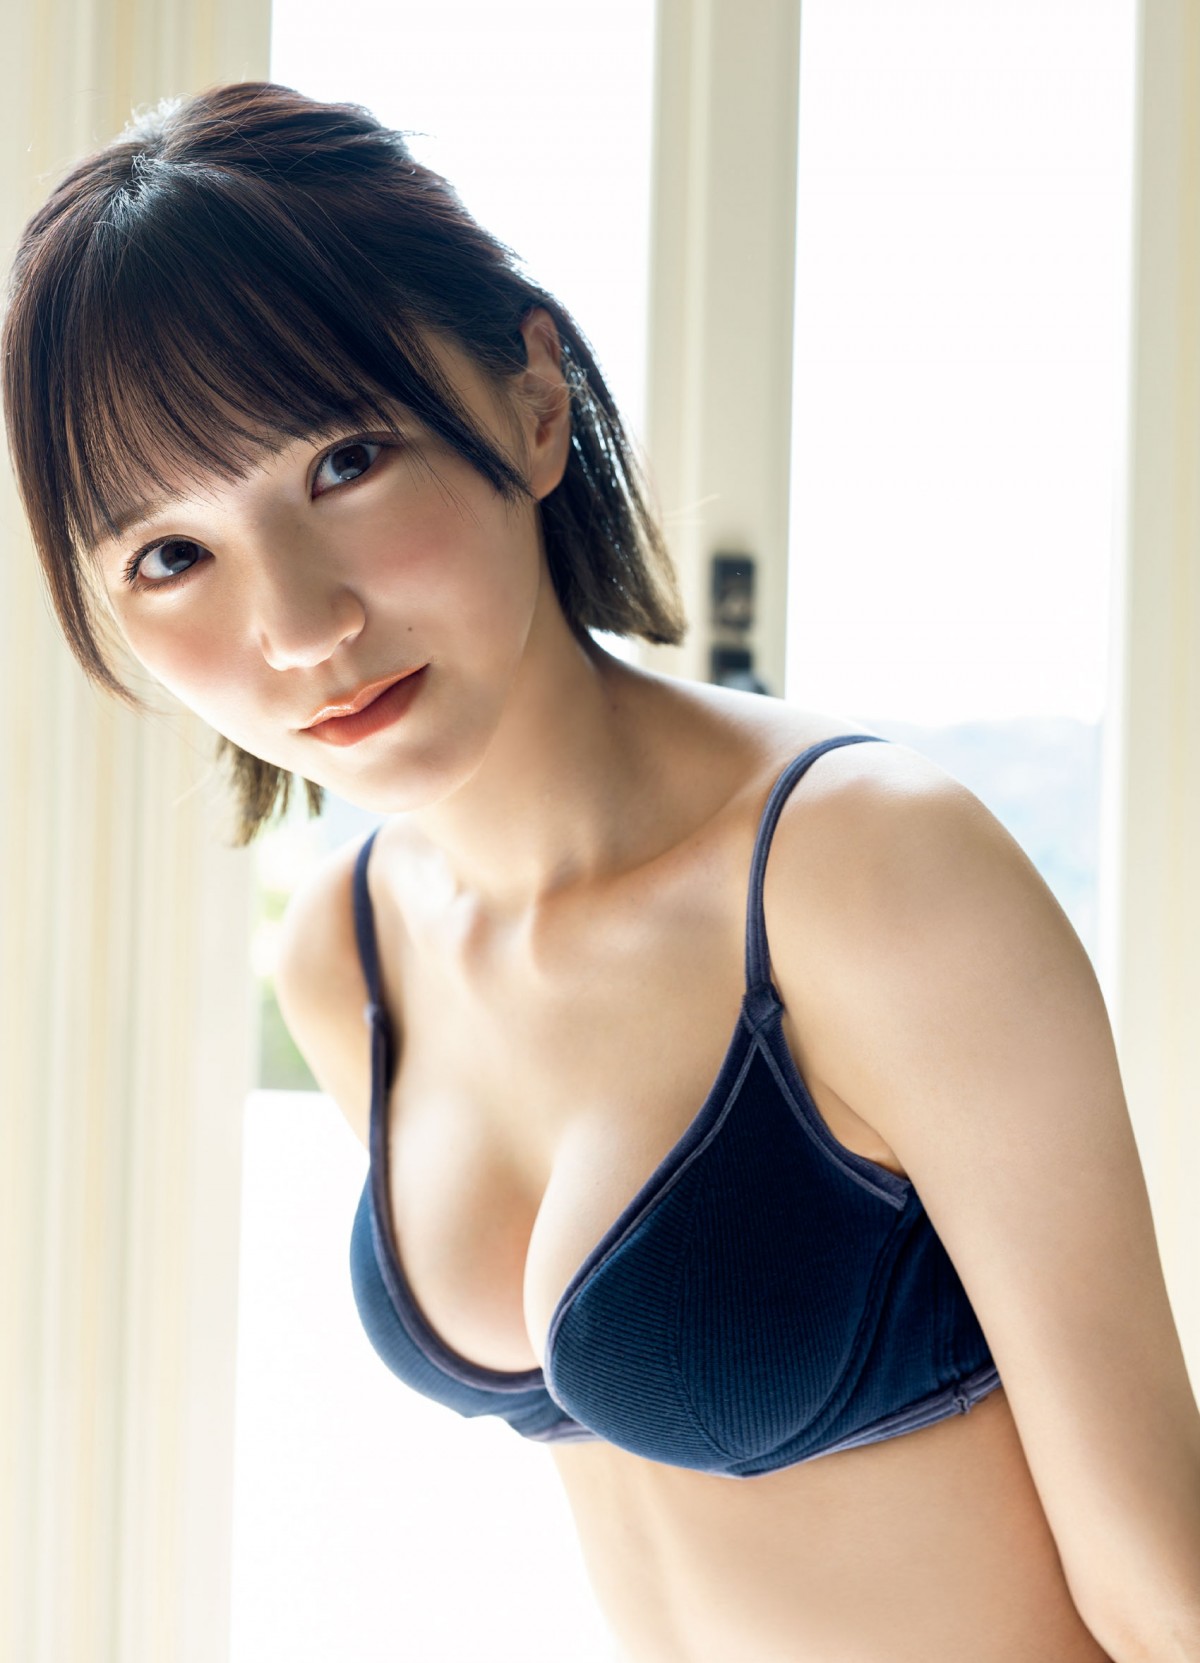 HKT48・田中美久20歳、美バストを大胆披露